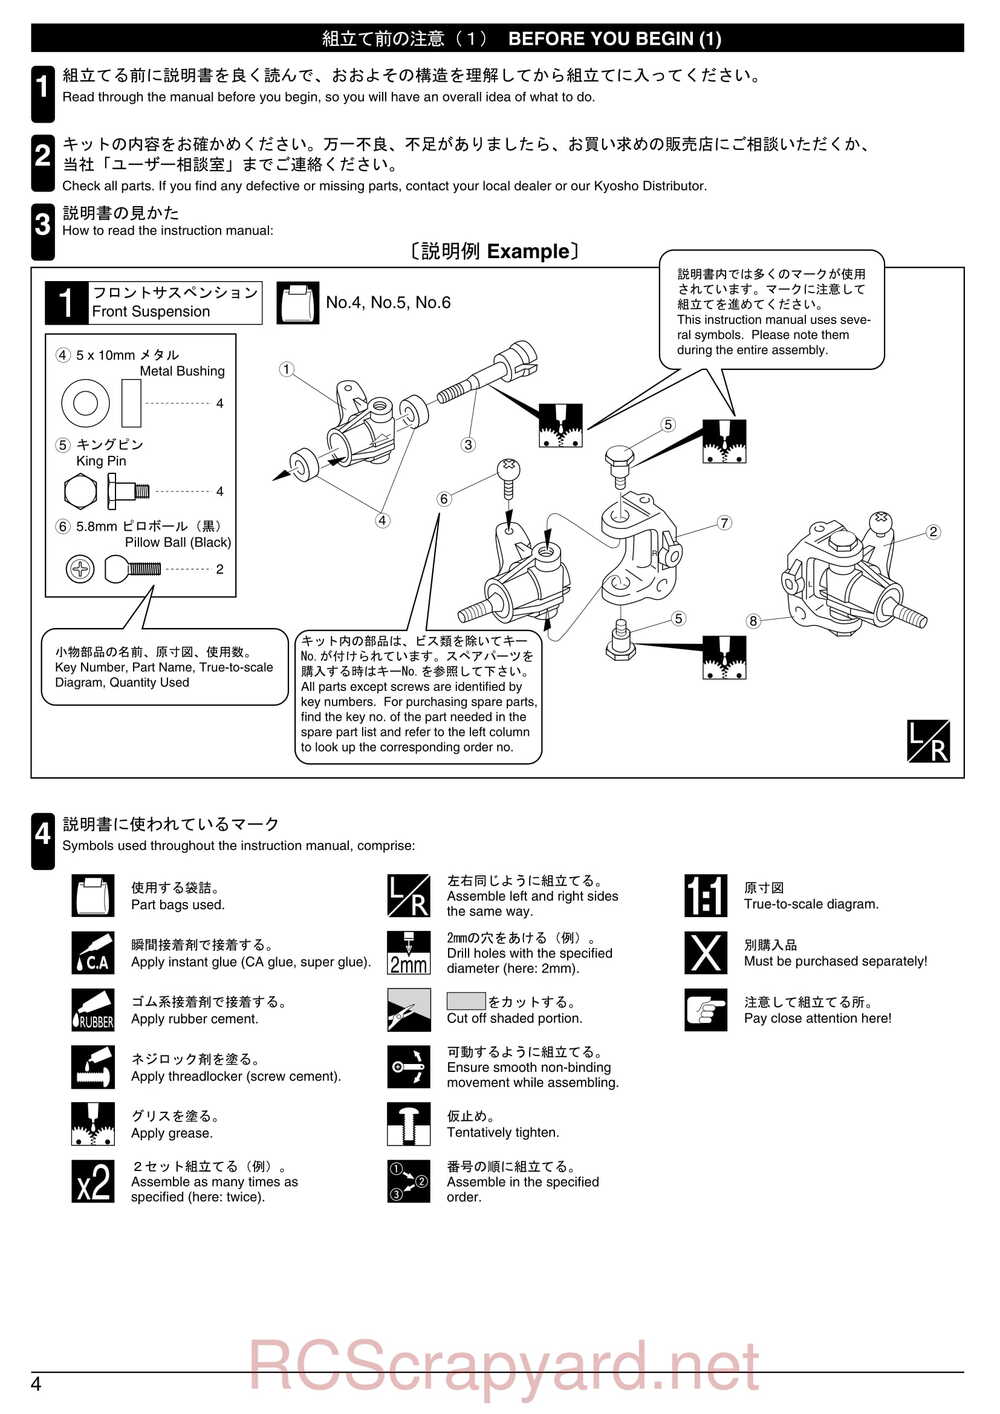 Kyosho - 31283 - Evolva-2003 - Manual - Page 04